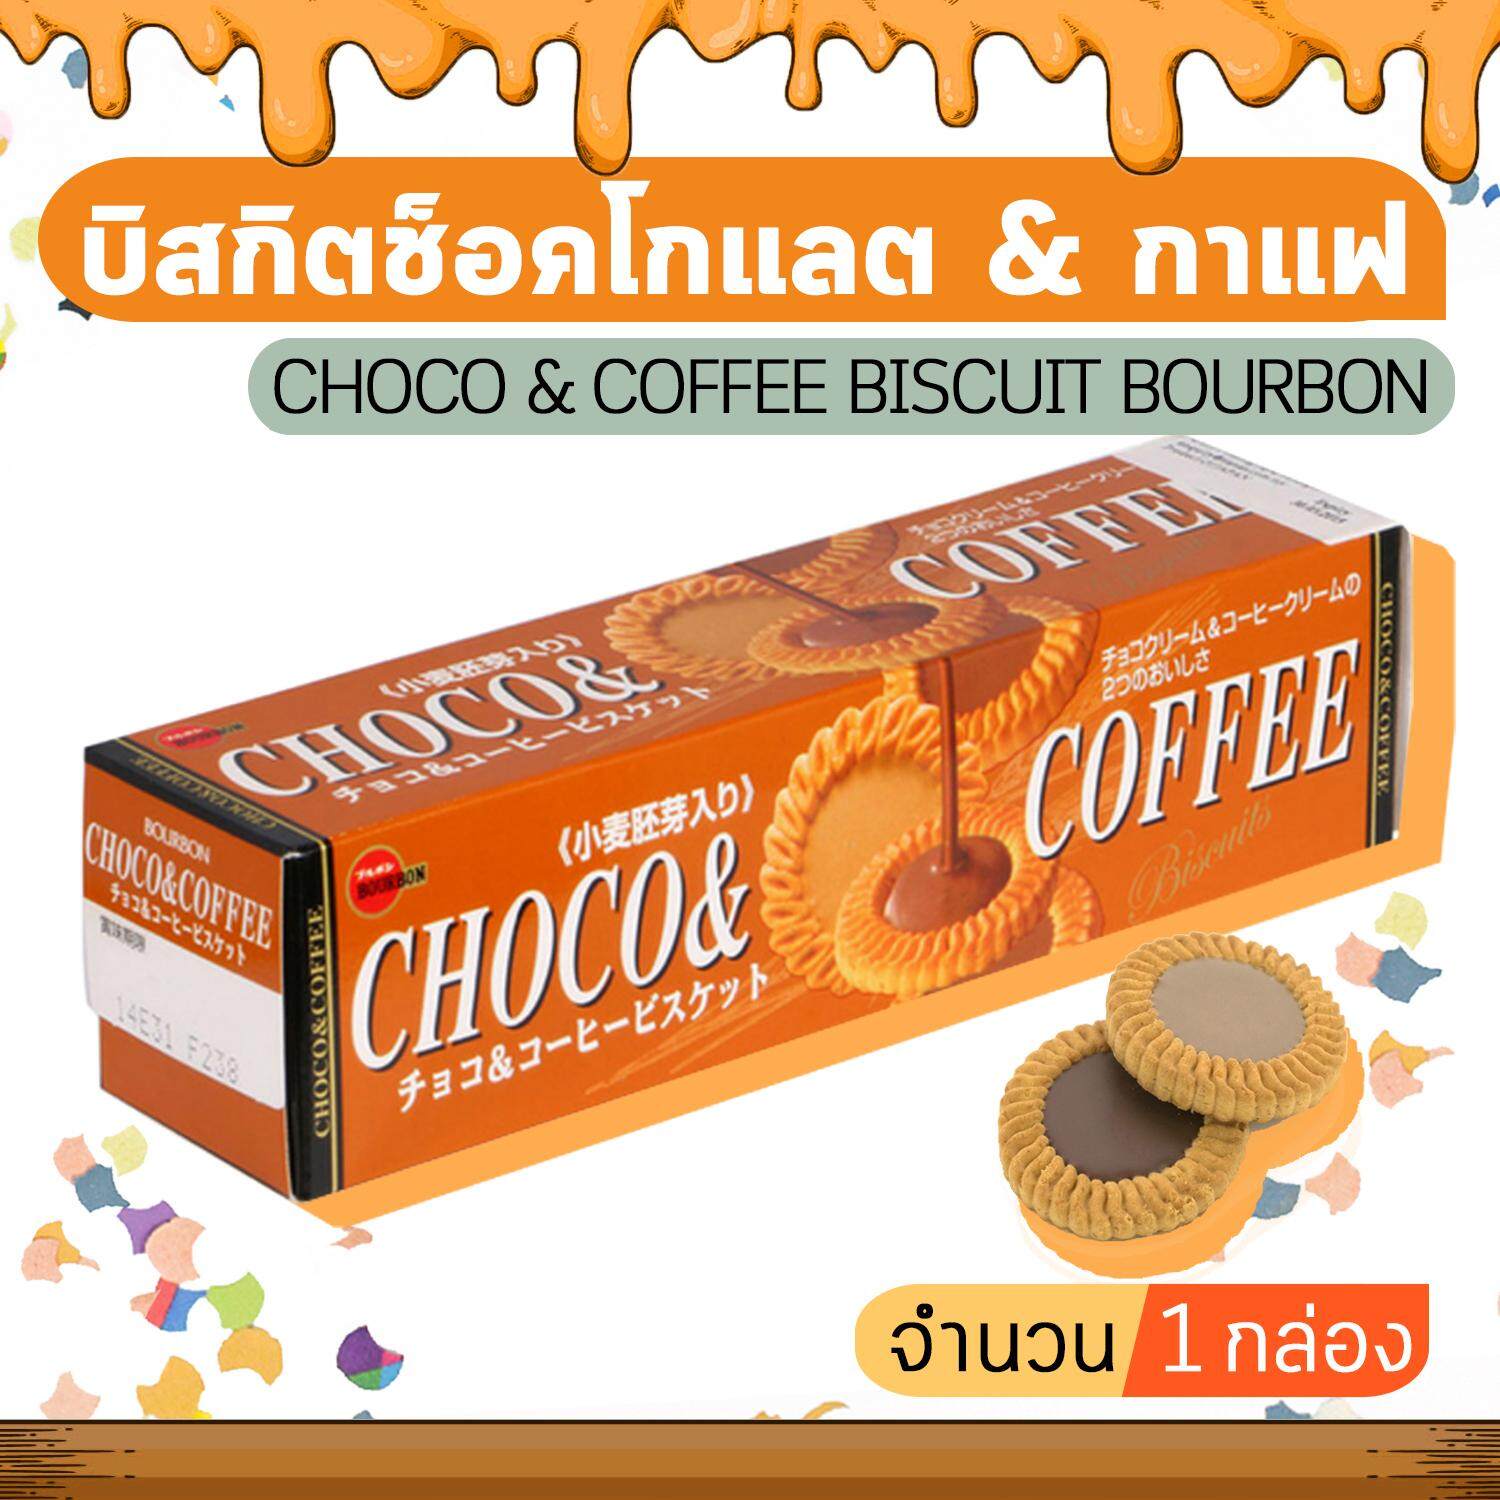 CHOCO & COFFEE BISCUIT BOURBON เบอร์บอน ช็อคโก แอนด์ คอฟฟี่ บิสกิตช็อคโกแลต (จำนวน 1 กล่อง)